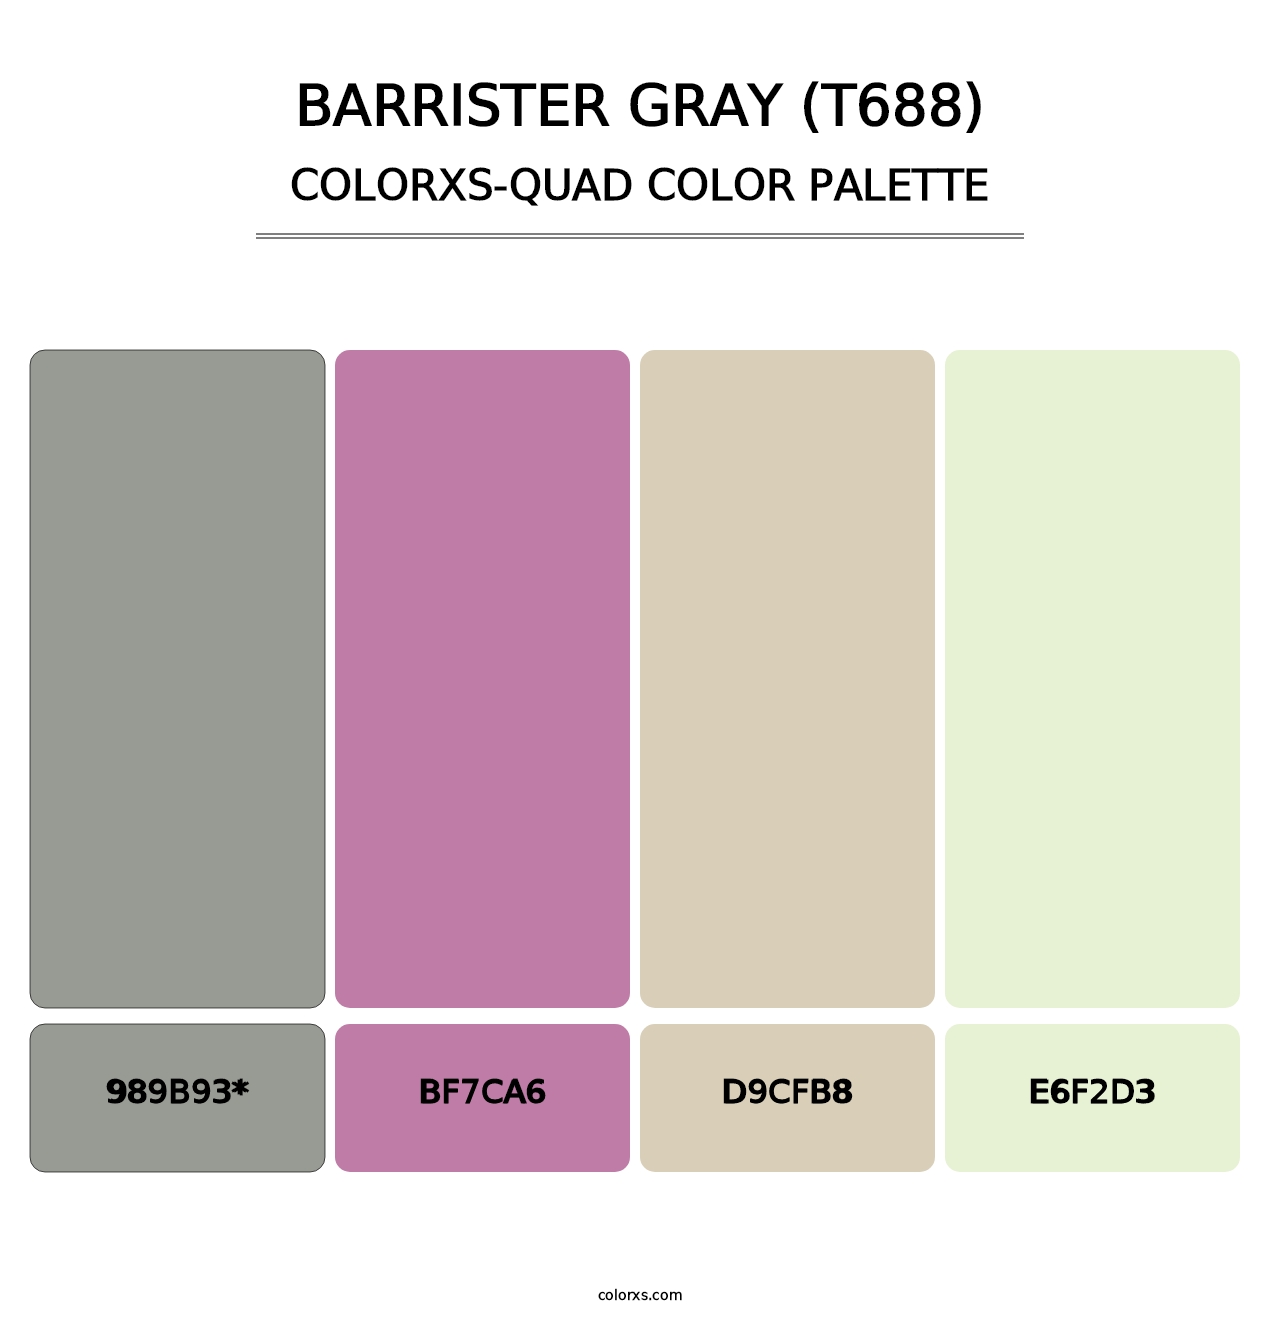 Barrister Gray (T688) - Colorxs Quad Palette